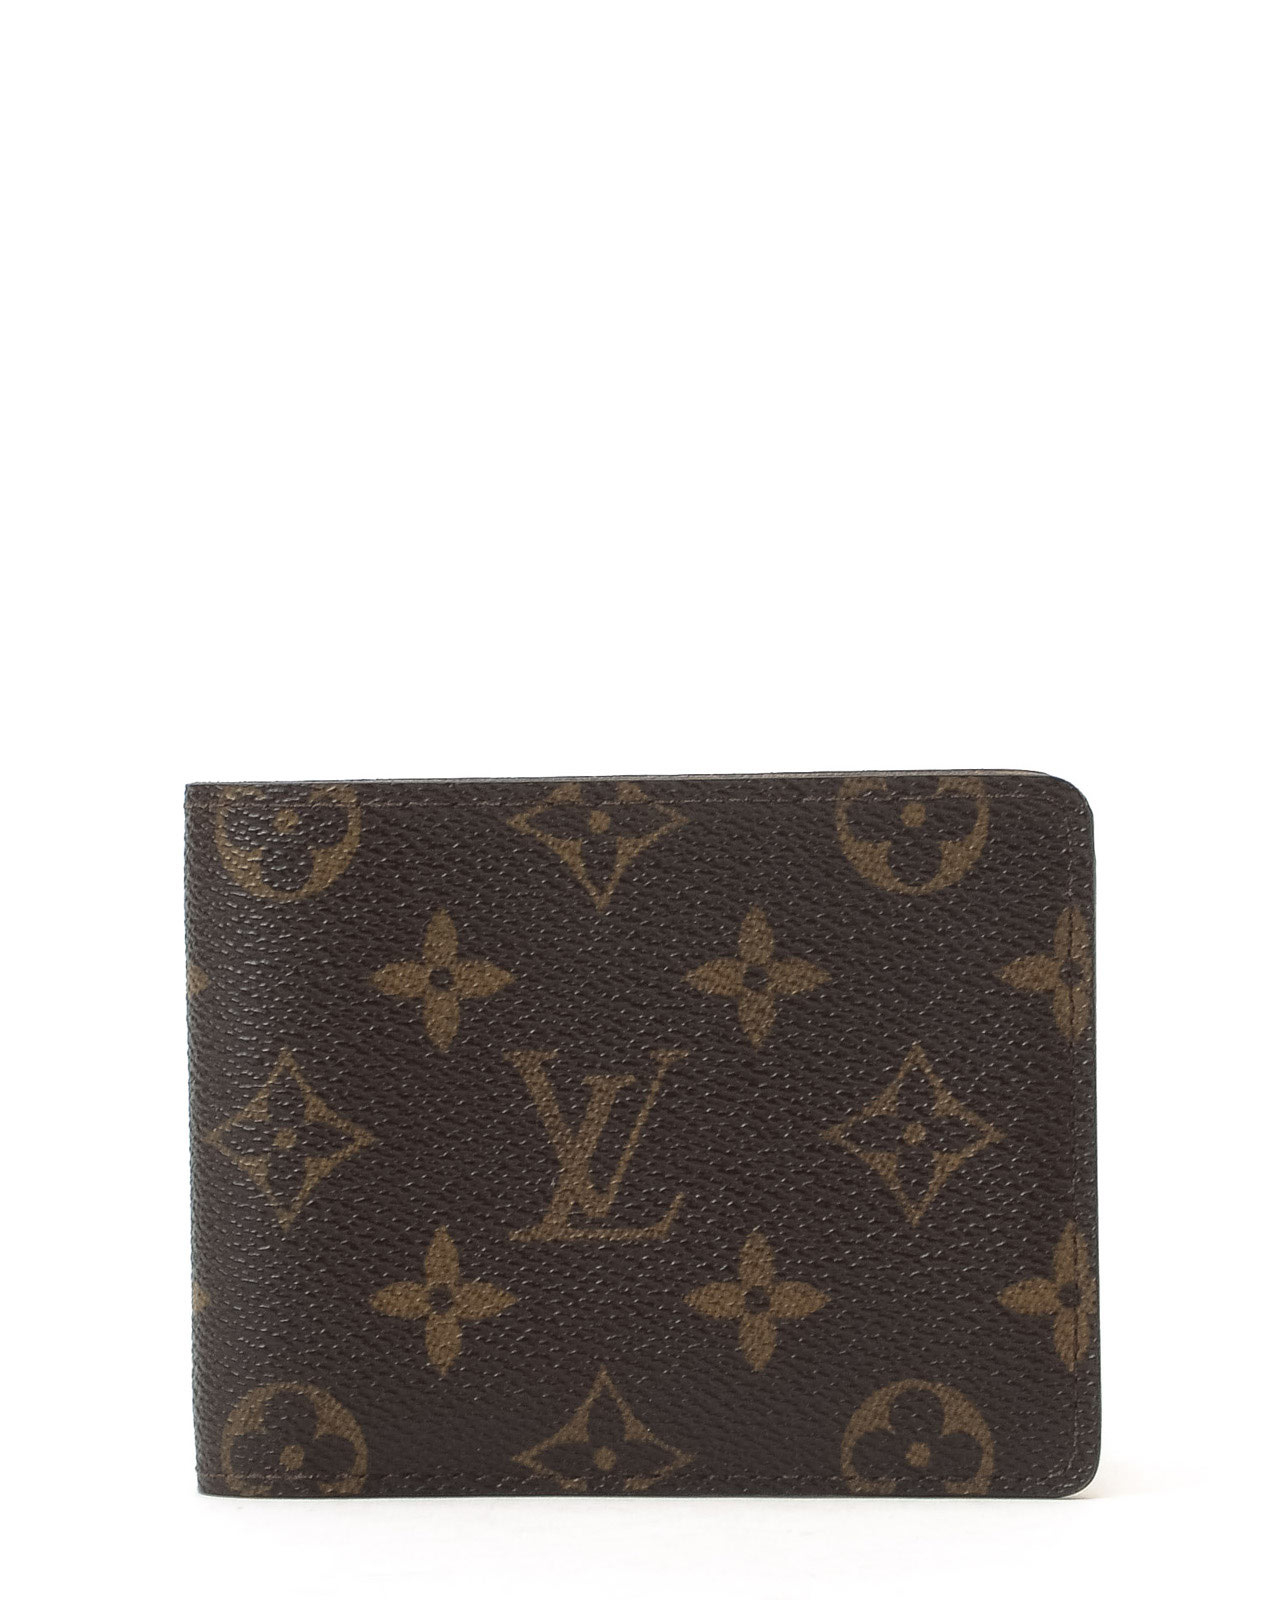 Lyst - Louis Vuitton Monogram Wallet in Brown